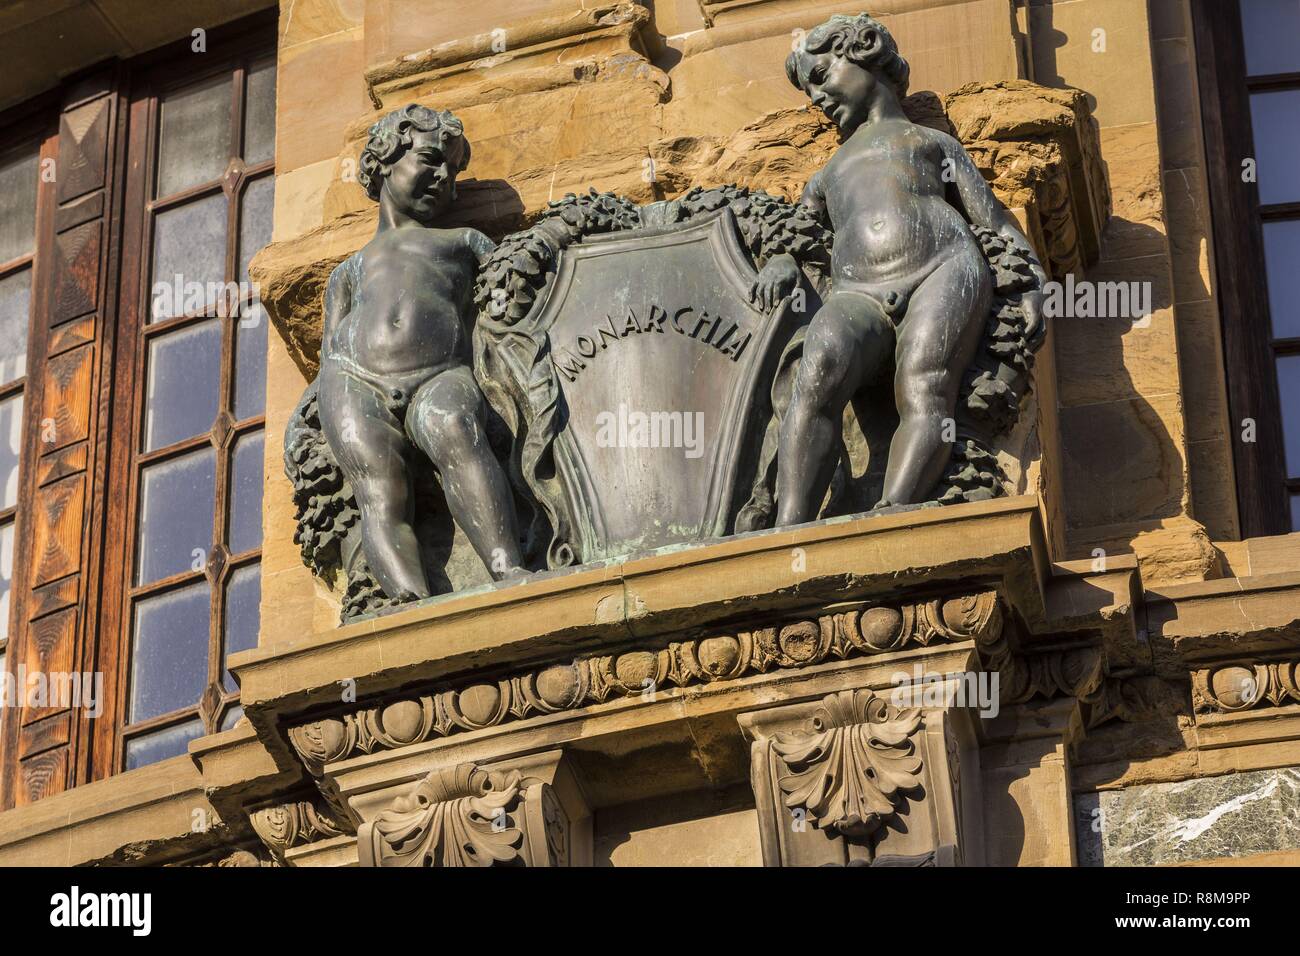 Italien, Toskana, Florenz, die historische Altstadt zum Weltkulturerbe der UNESCO, Skulptur an der Fassade der Capella dei Pazzi Stockfoto